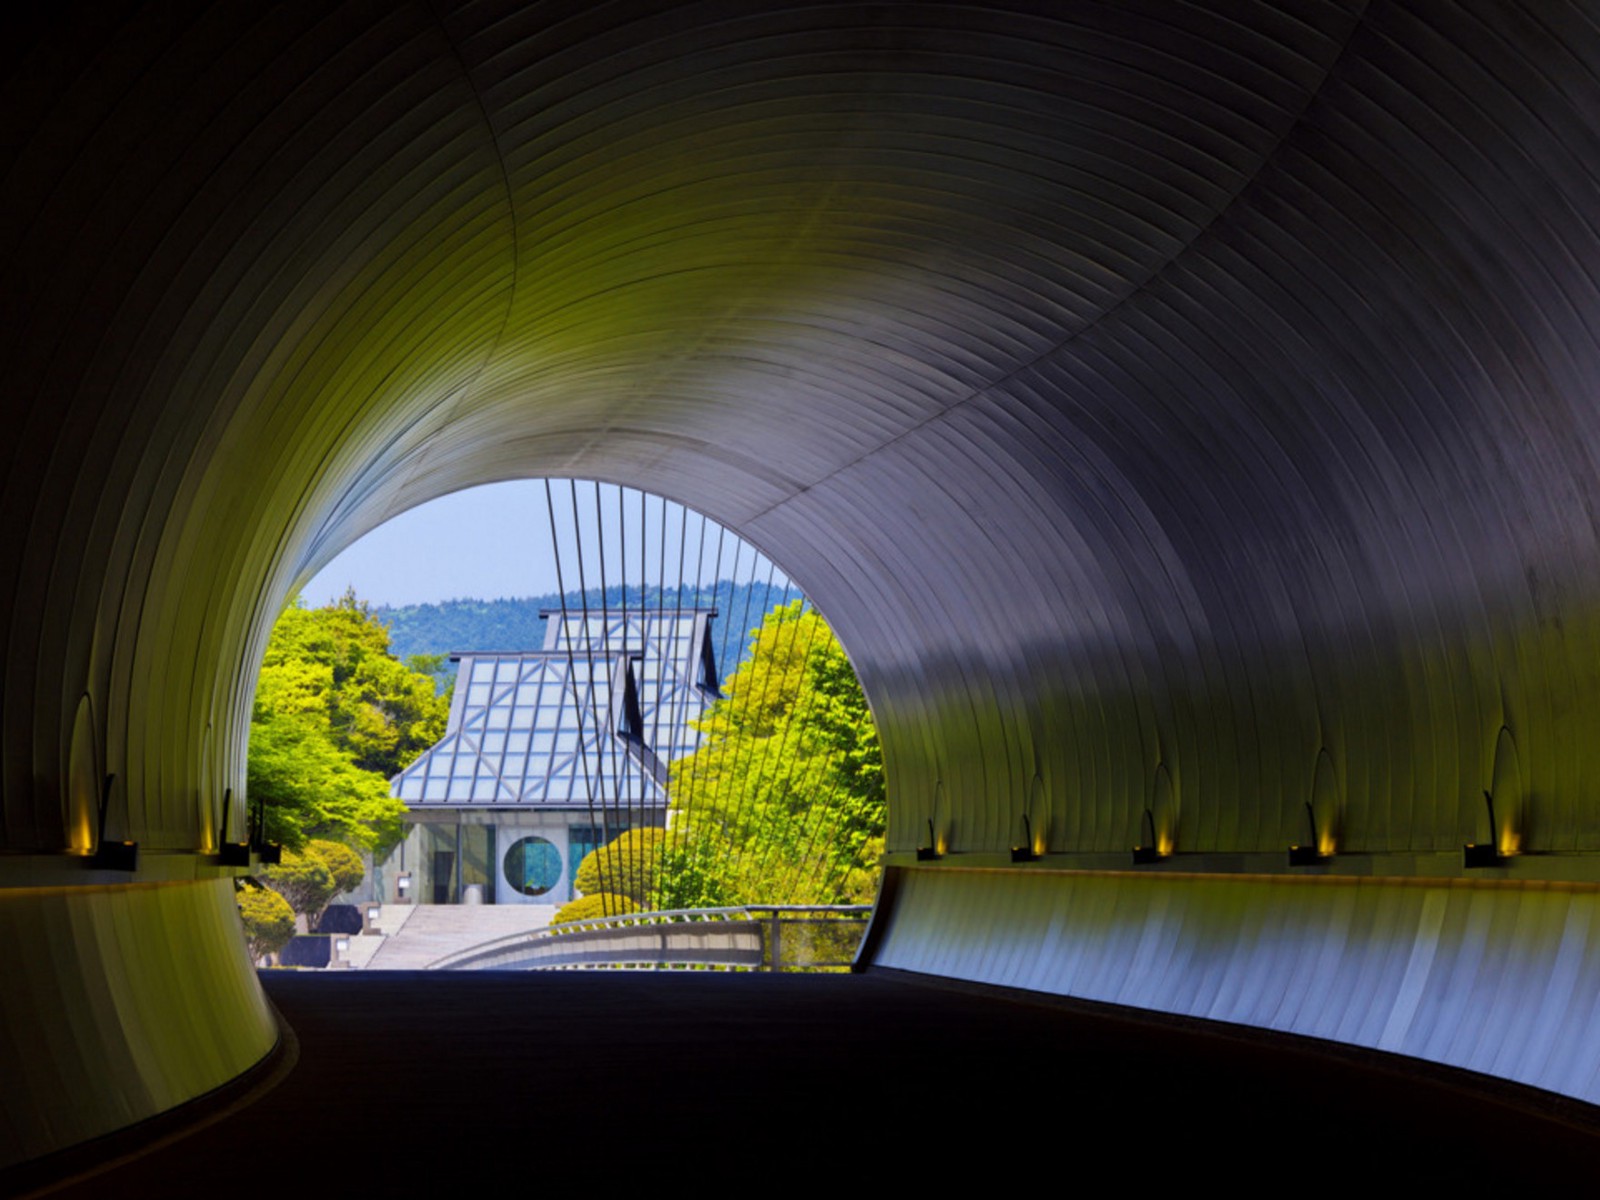 MIHO MUSEUM: I. M. Pei's Architectural Masterpiece - Japan Web Magazine